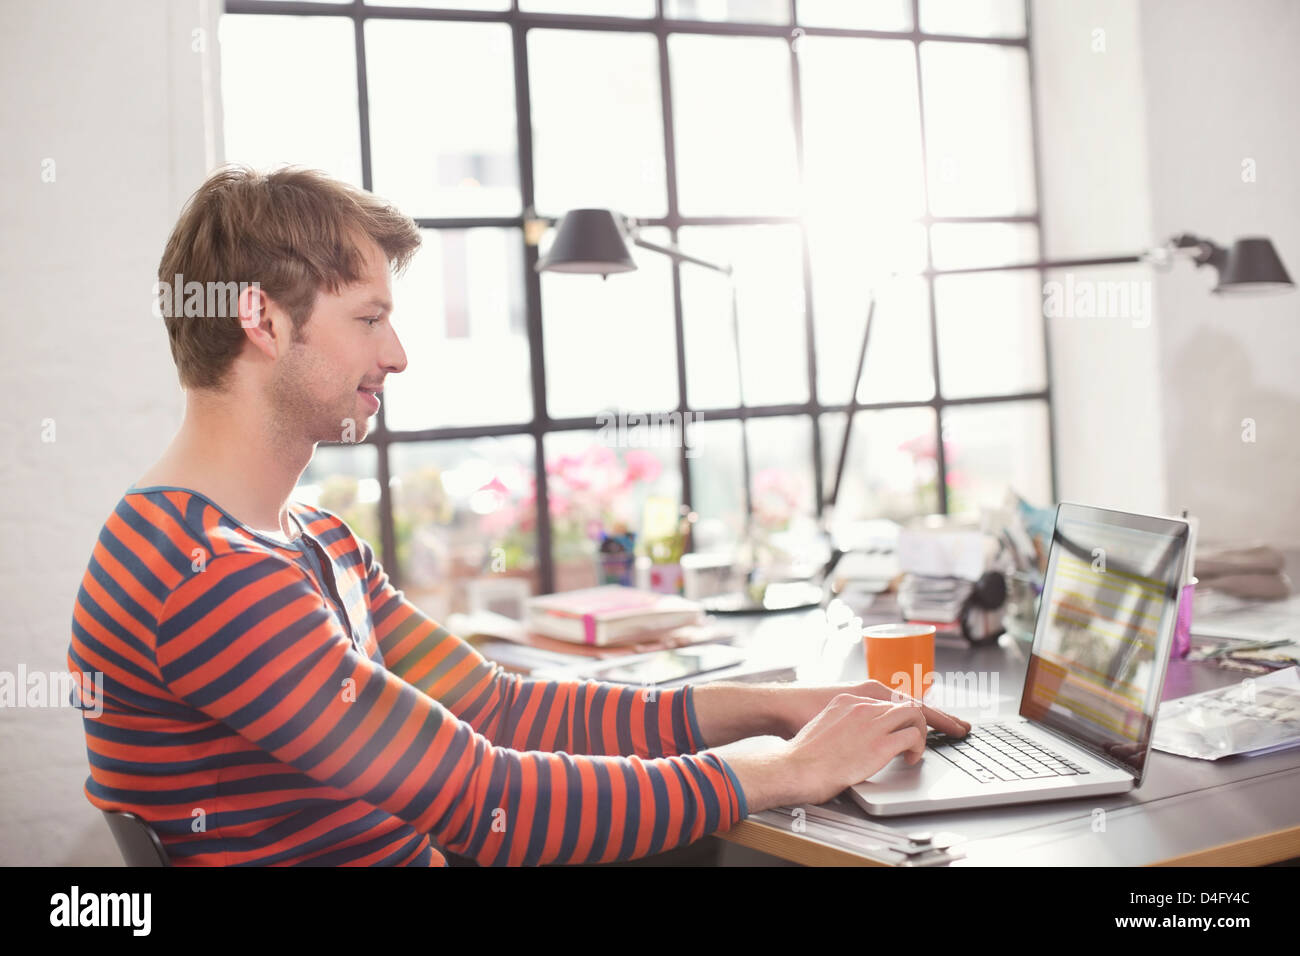 Man using laptop at desk Stock Photo